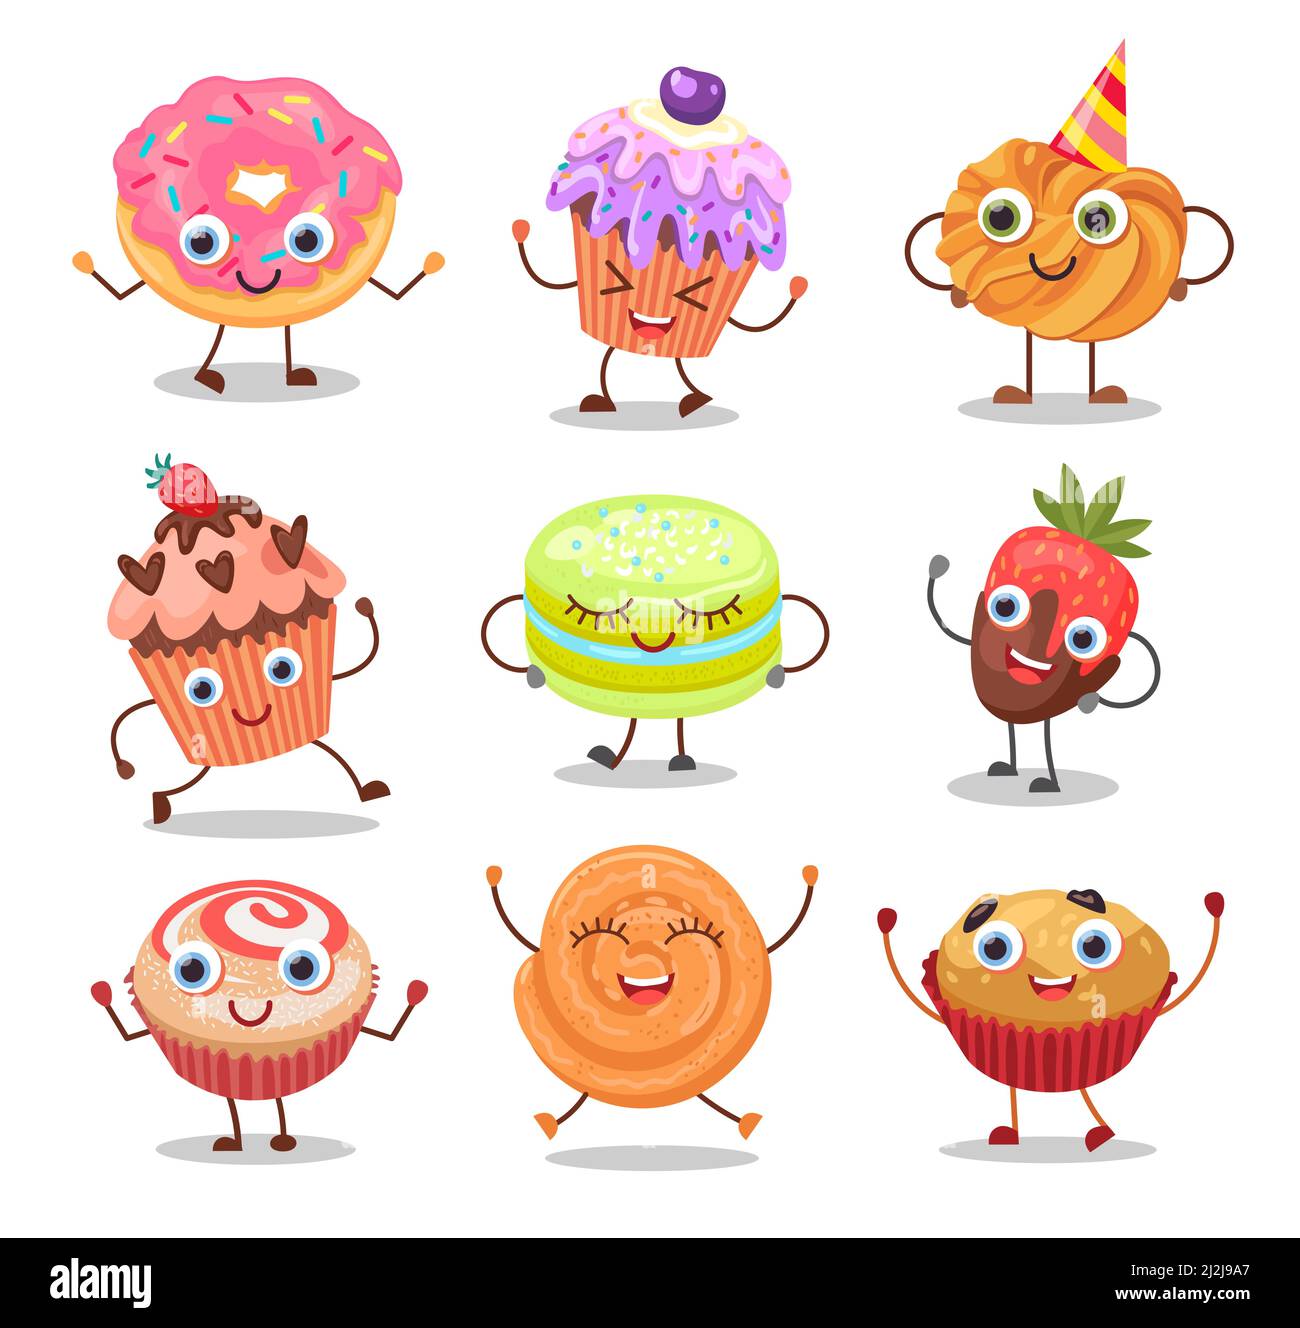 Muffin kawaii cara dibujos animados feliz Imágenes recortadas de stock -  Alamy